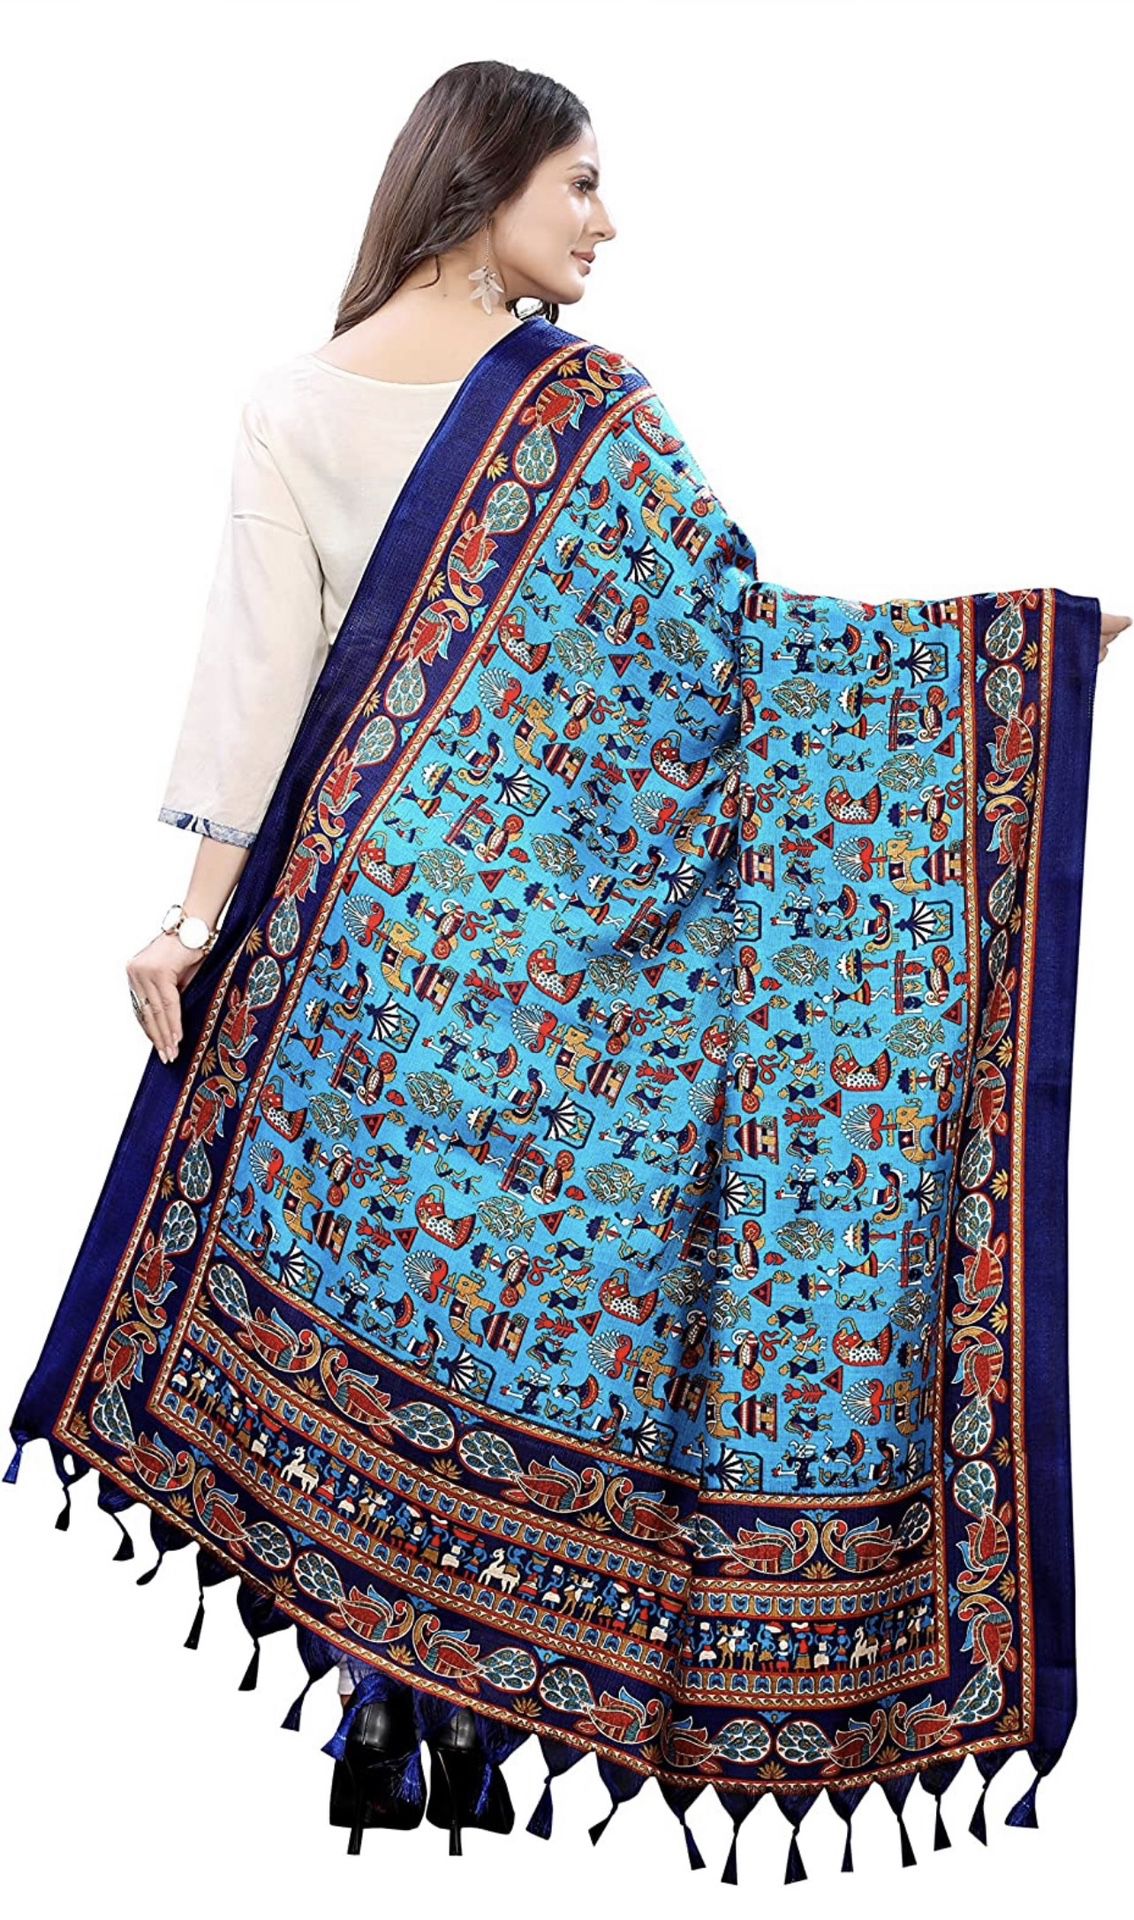 Blue Turquoise Printed India Art Silk Dupatta Wrap Scarf Stole Chunri shawl NEW